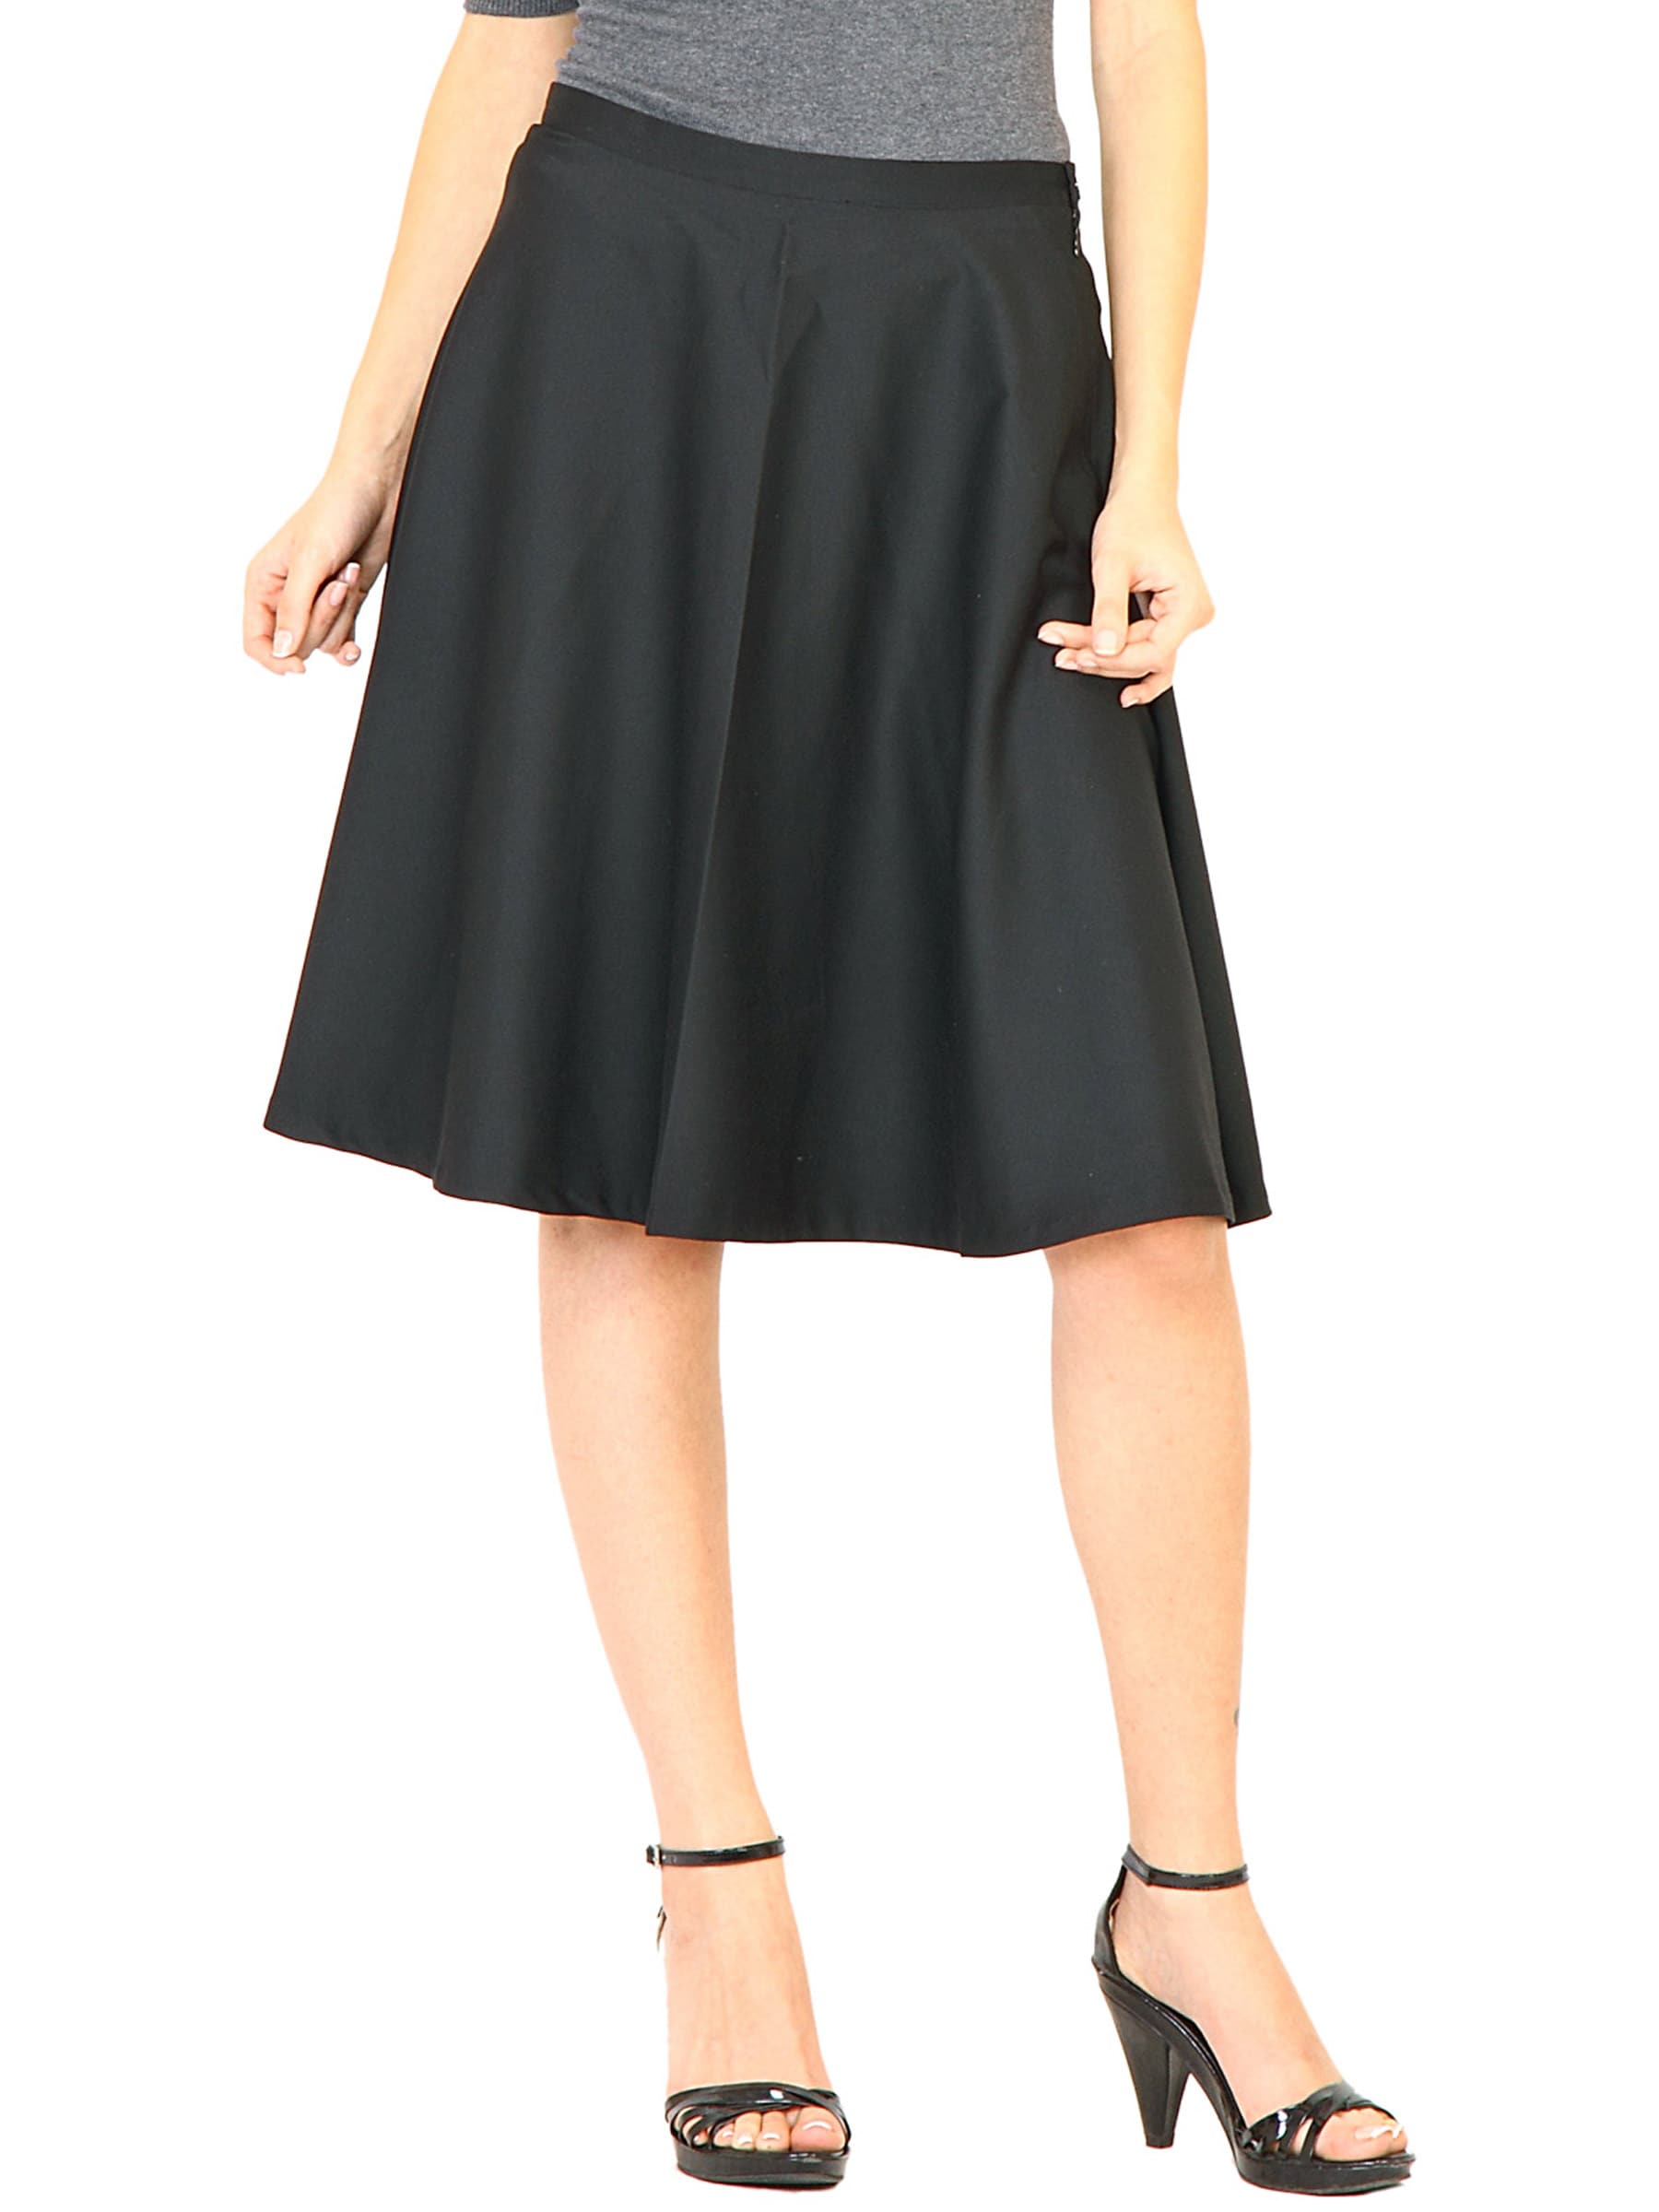 United Colors of Benetton Women Solid Black Skirt